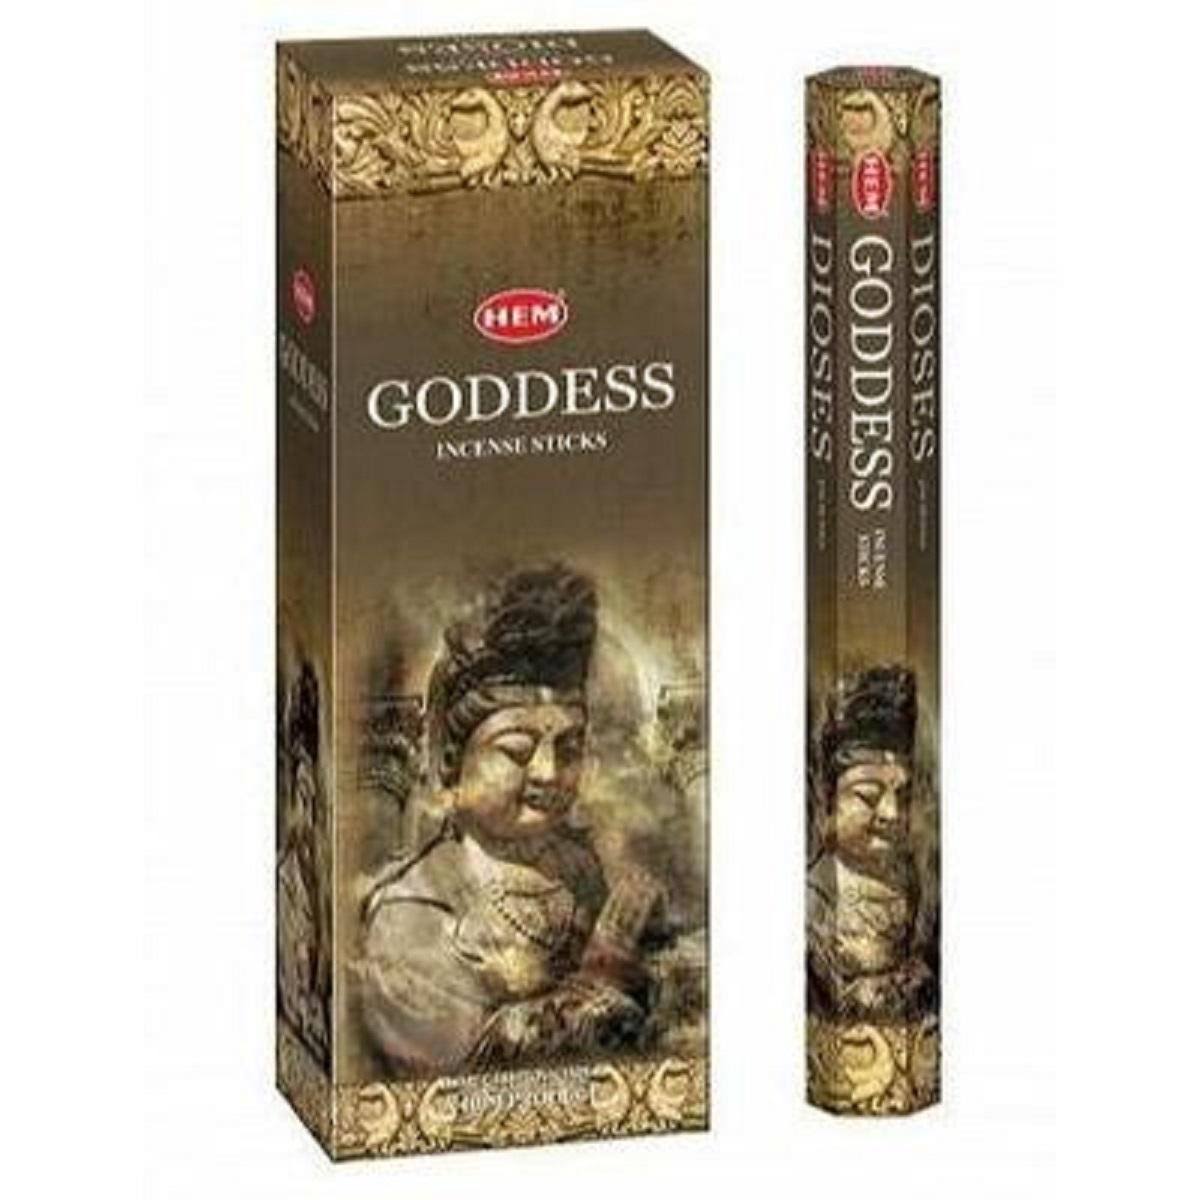 Hem Goddess Hexa Incense Sticks